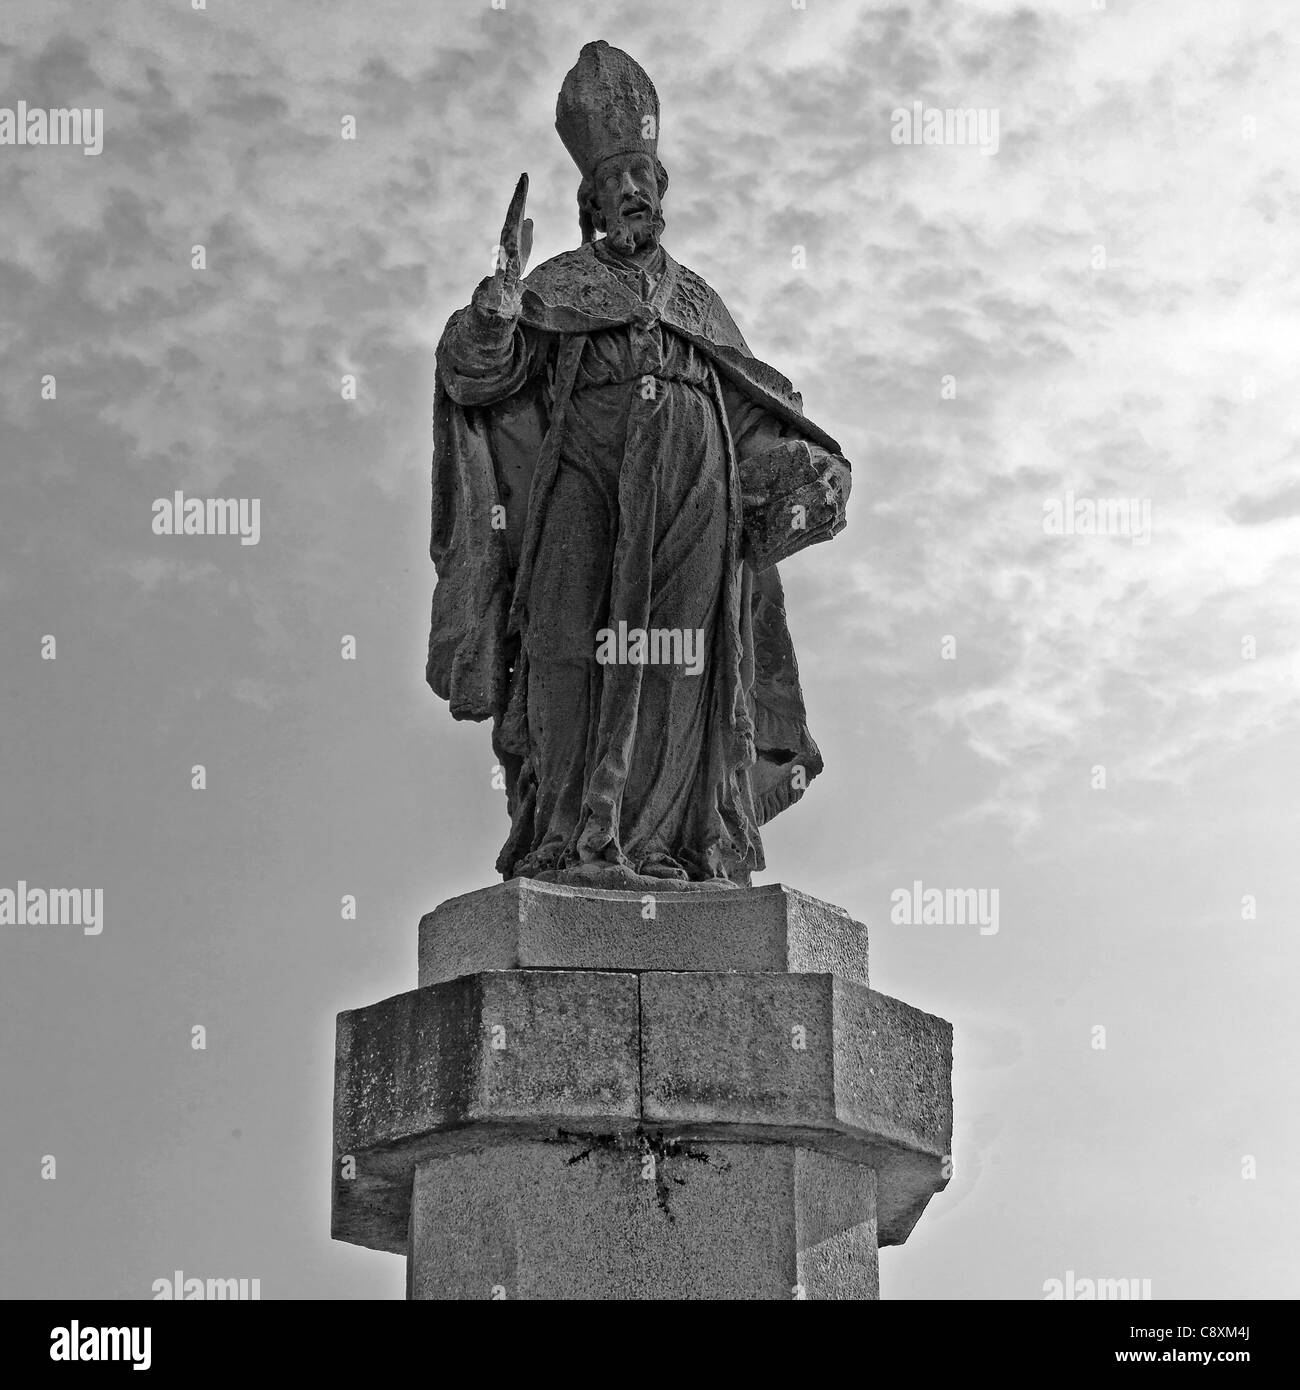 Statue des Papstes gegen den Himmel fotografiert Stockfoto